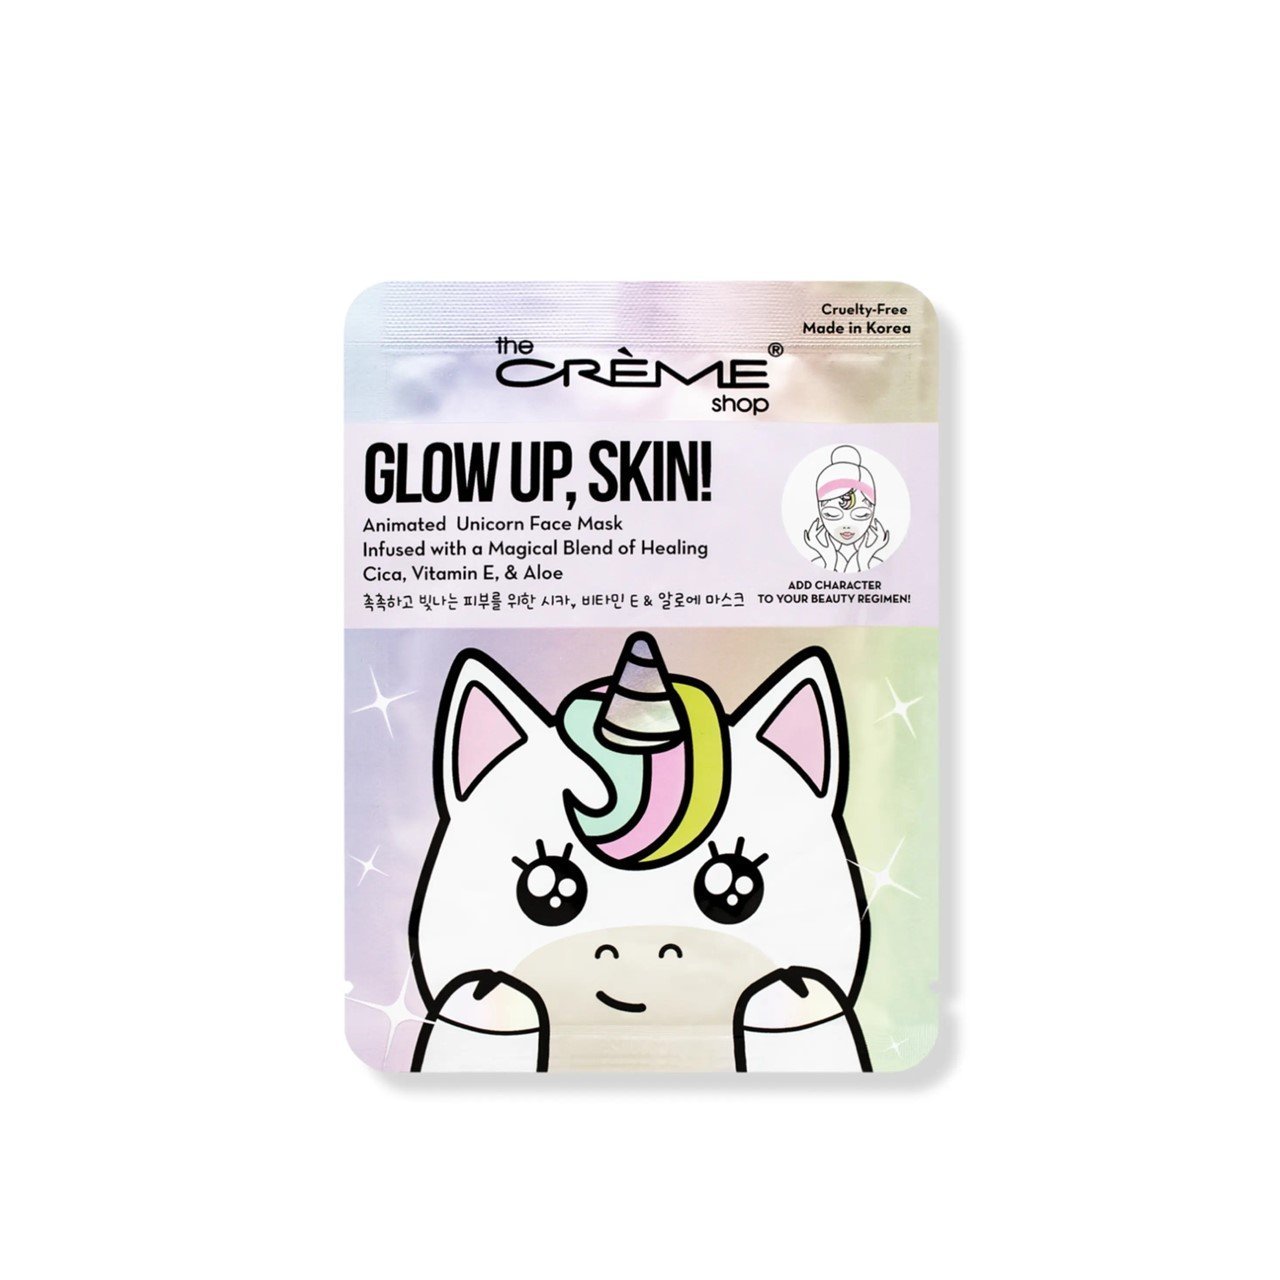 The Crème Shop Glow Up, Skin! Animated Unicorn Face Mask 25g (0.88 oz)